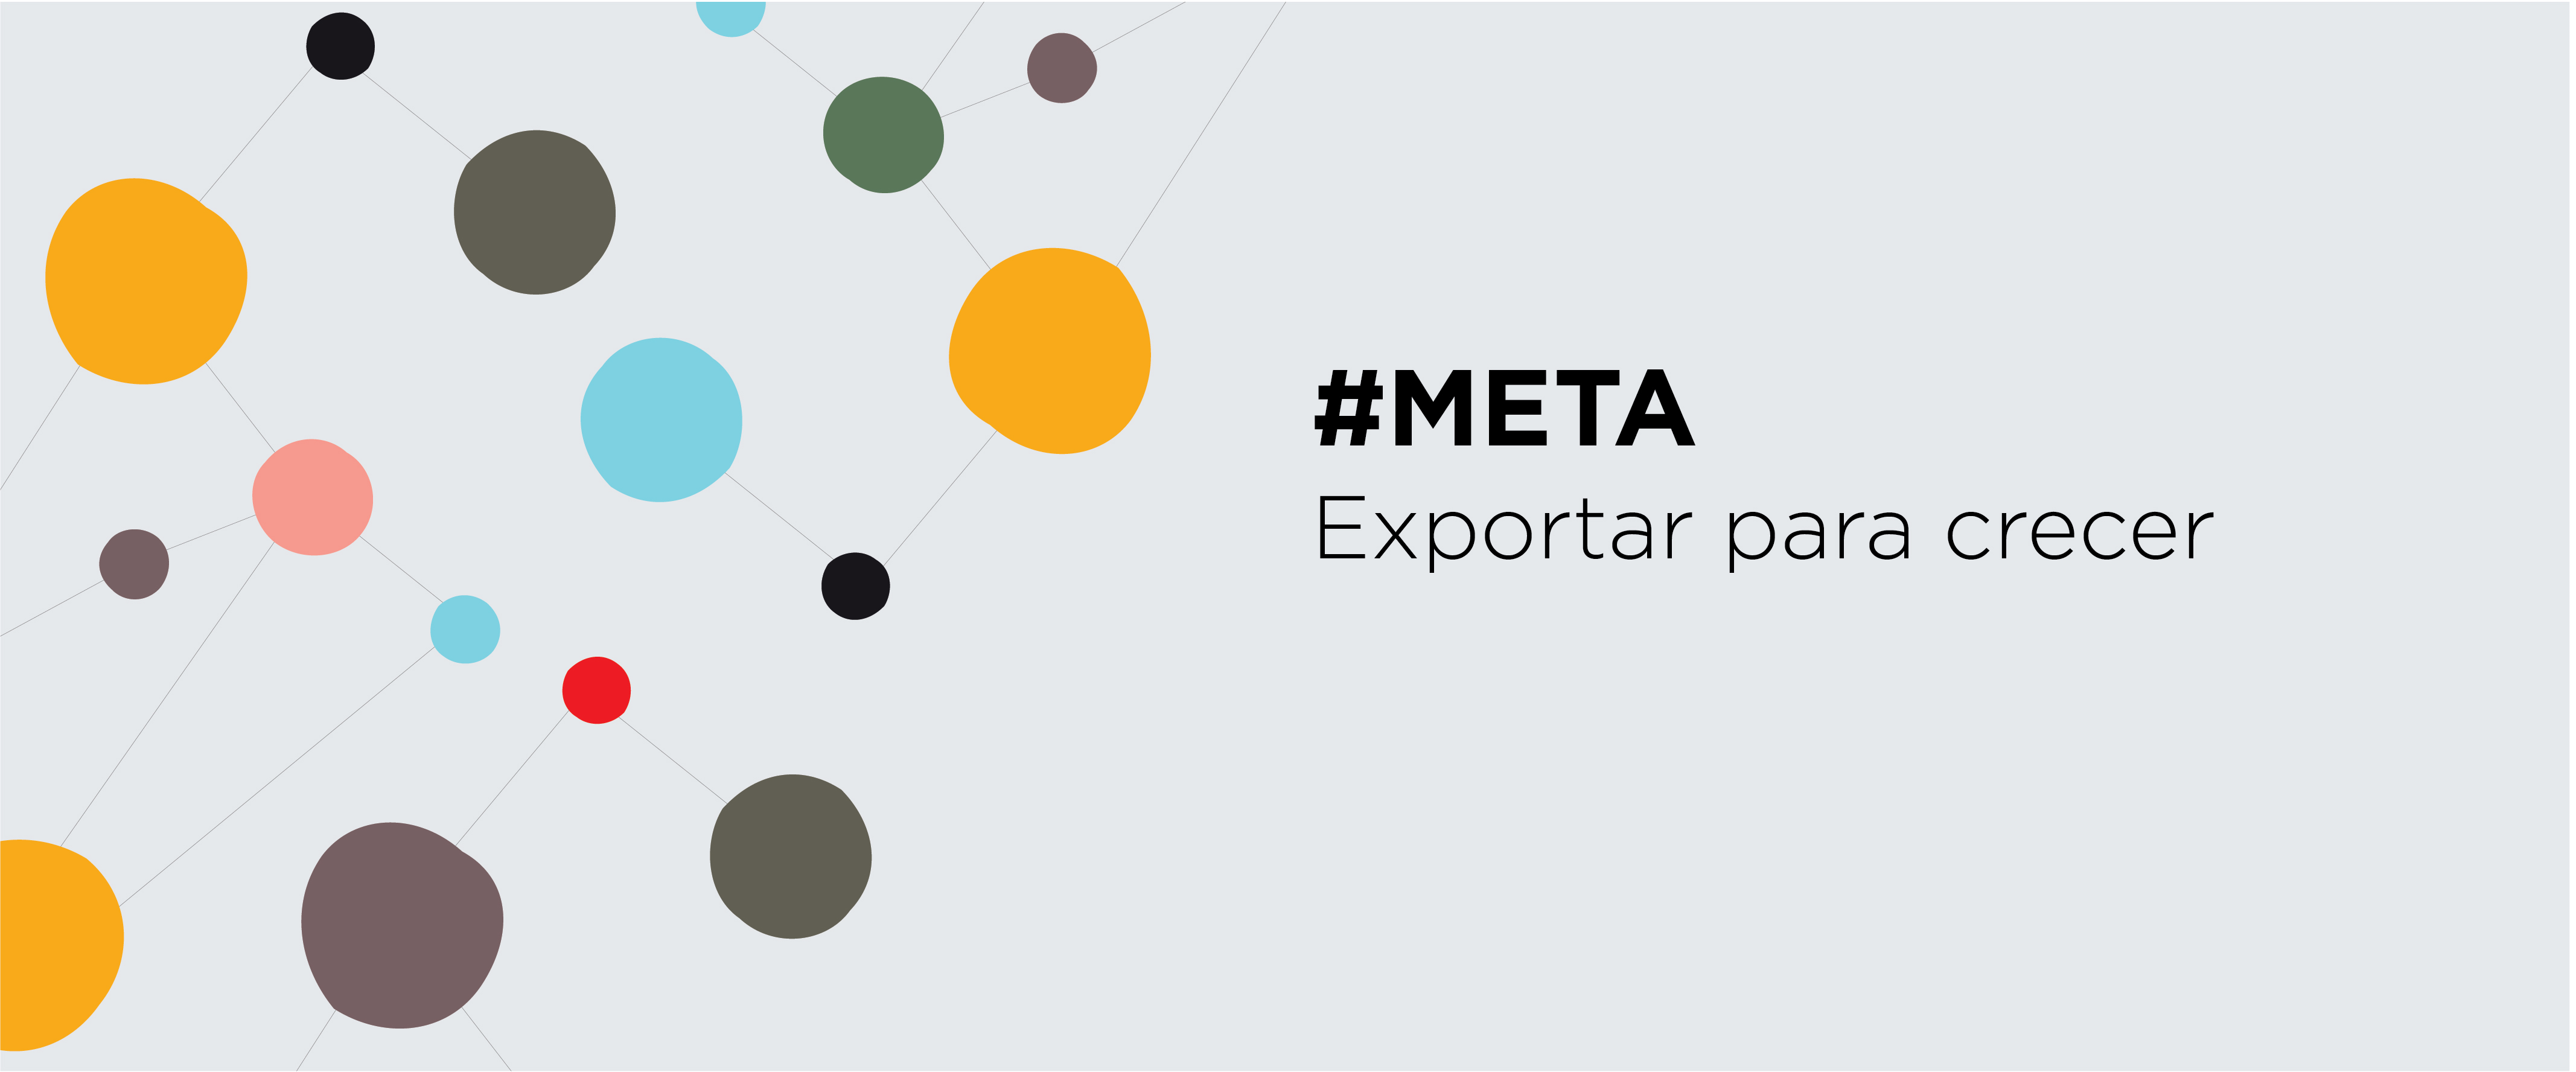 Flyer "Meta: exportar para crecer" de CIPPEC